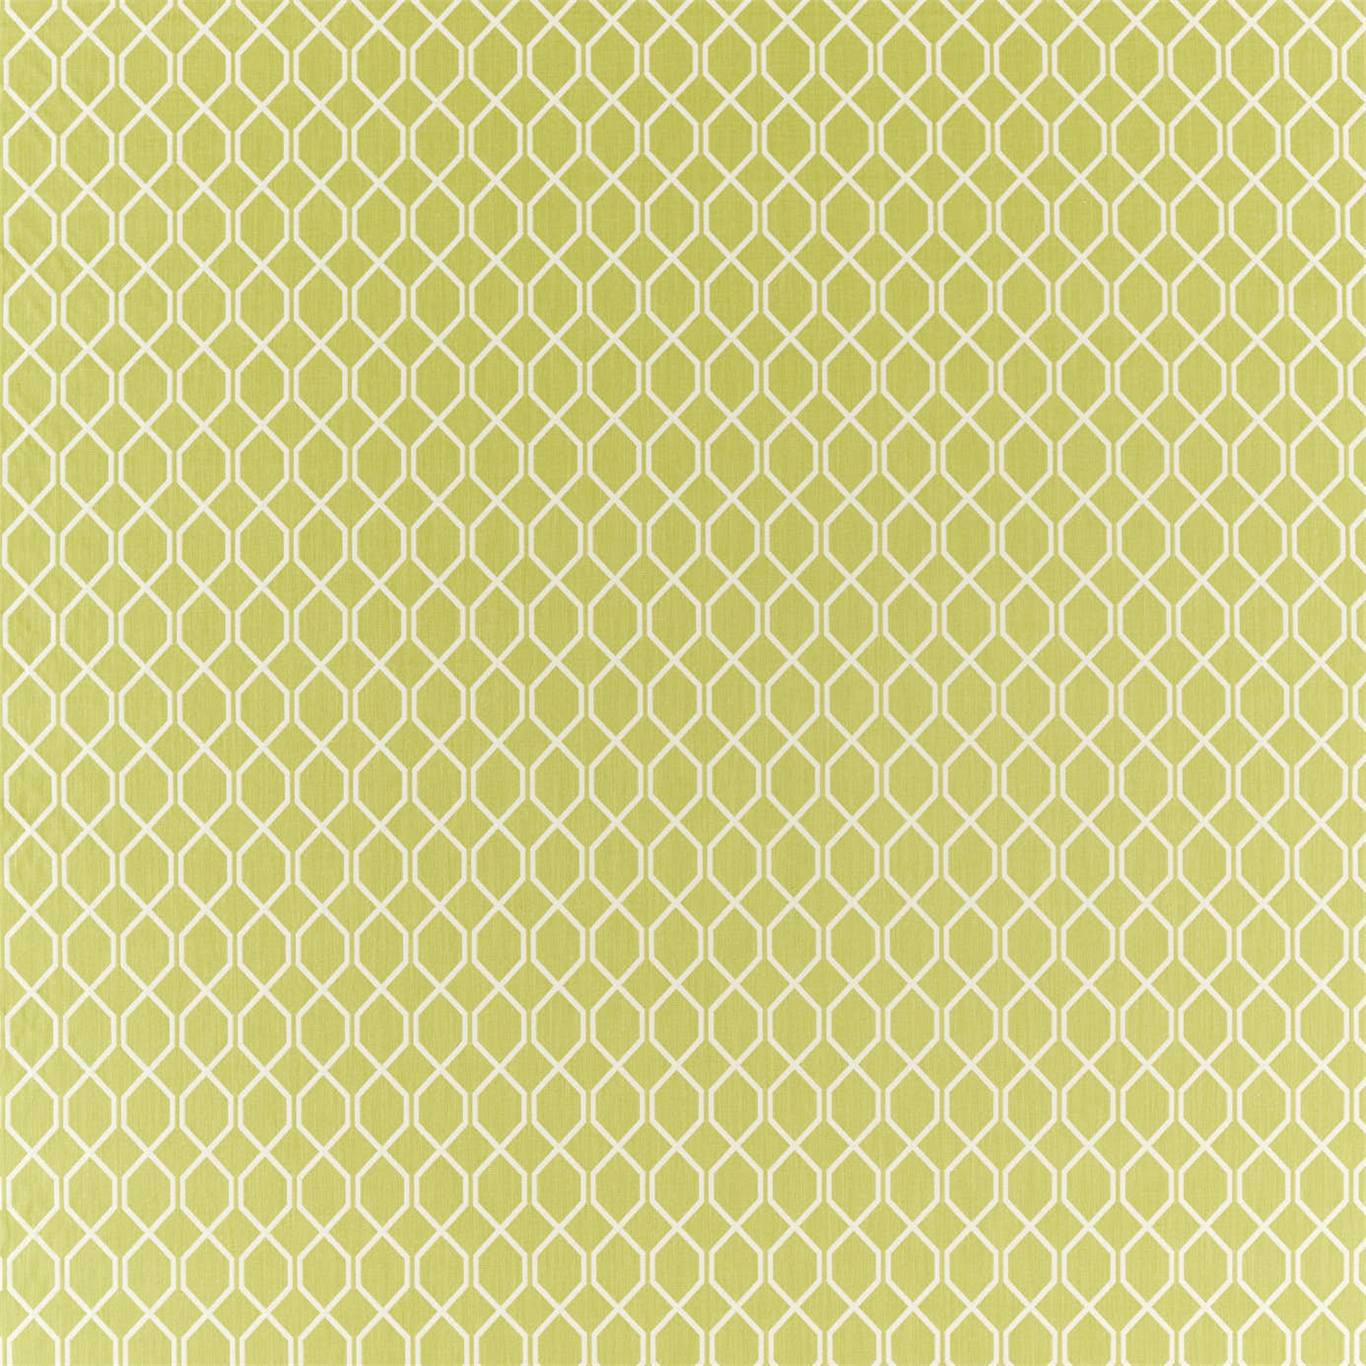 Botanic Trellis Lime Fabric by SAN